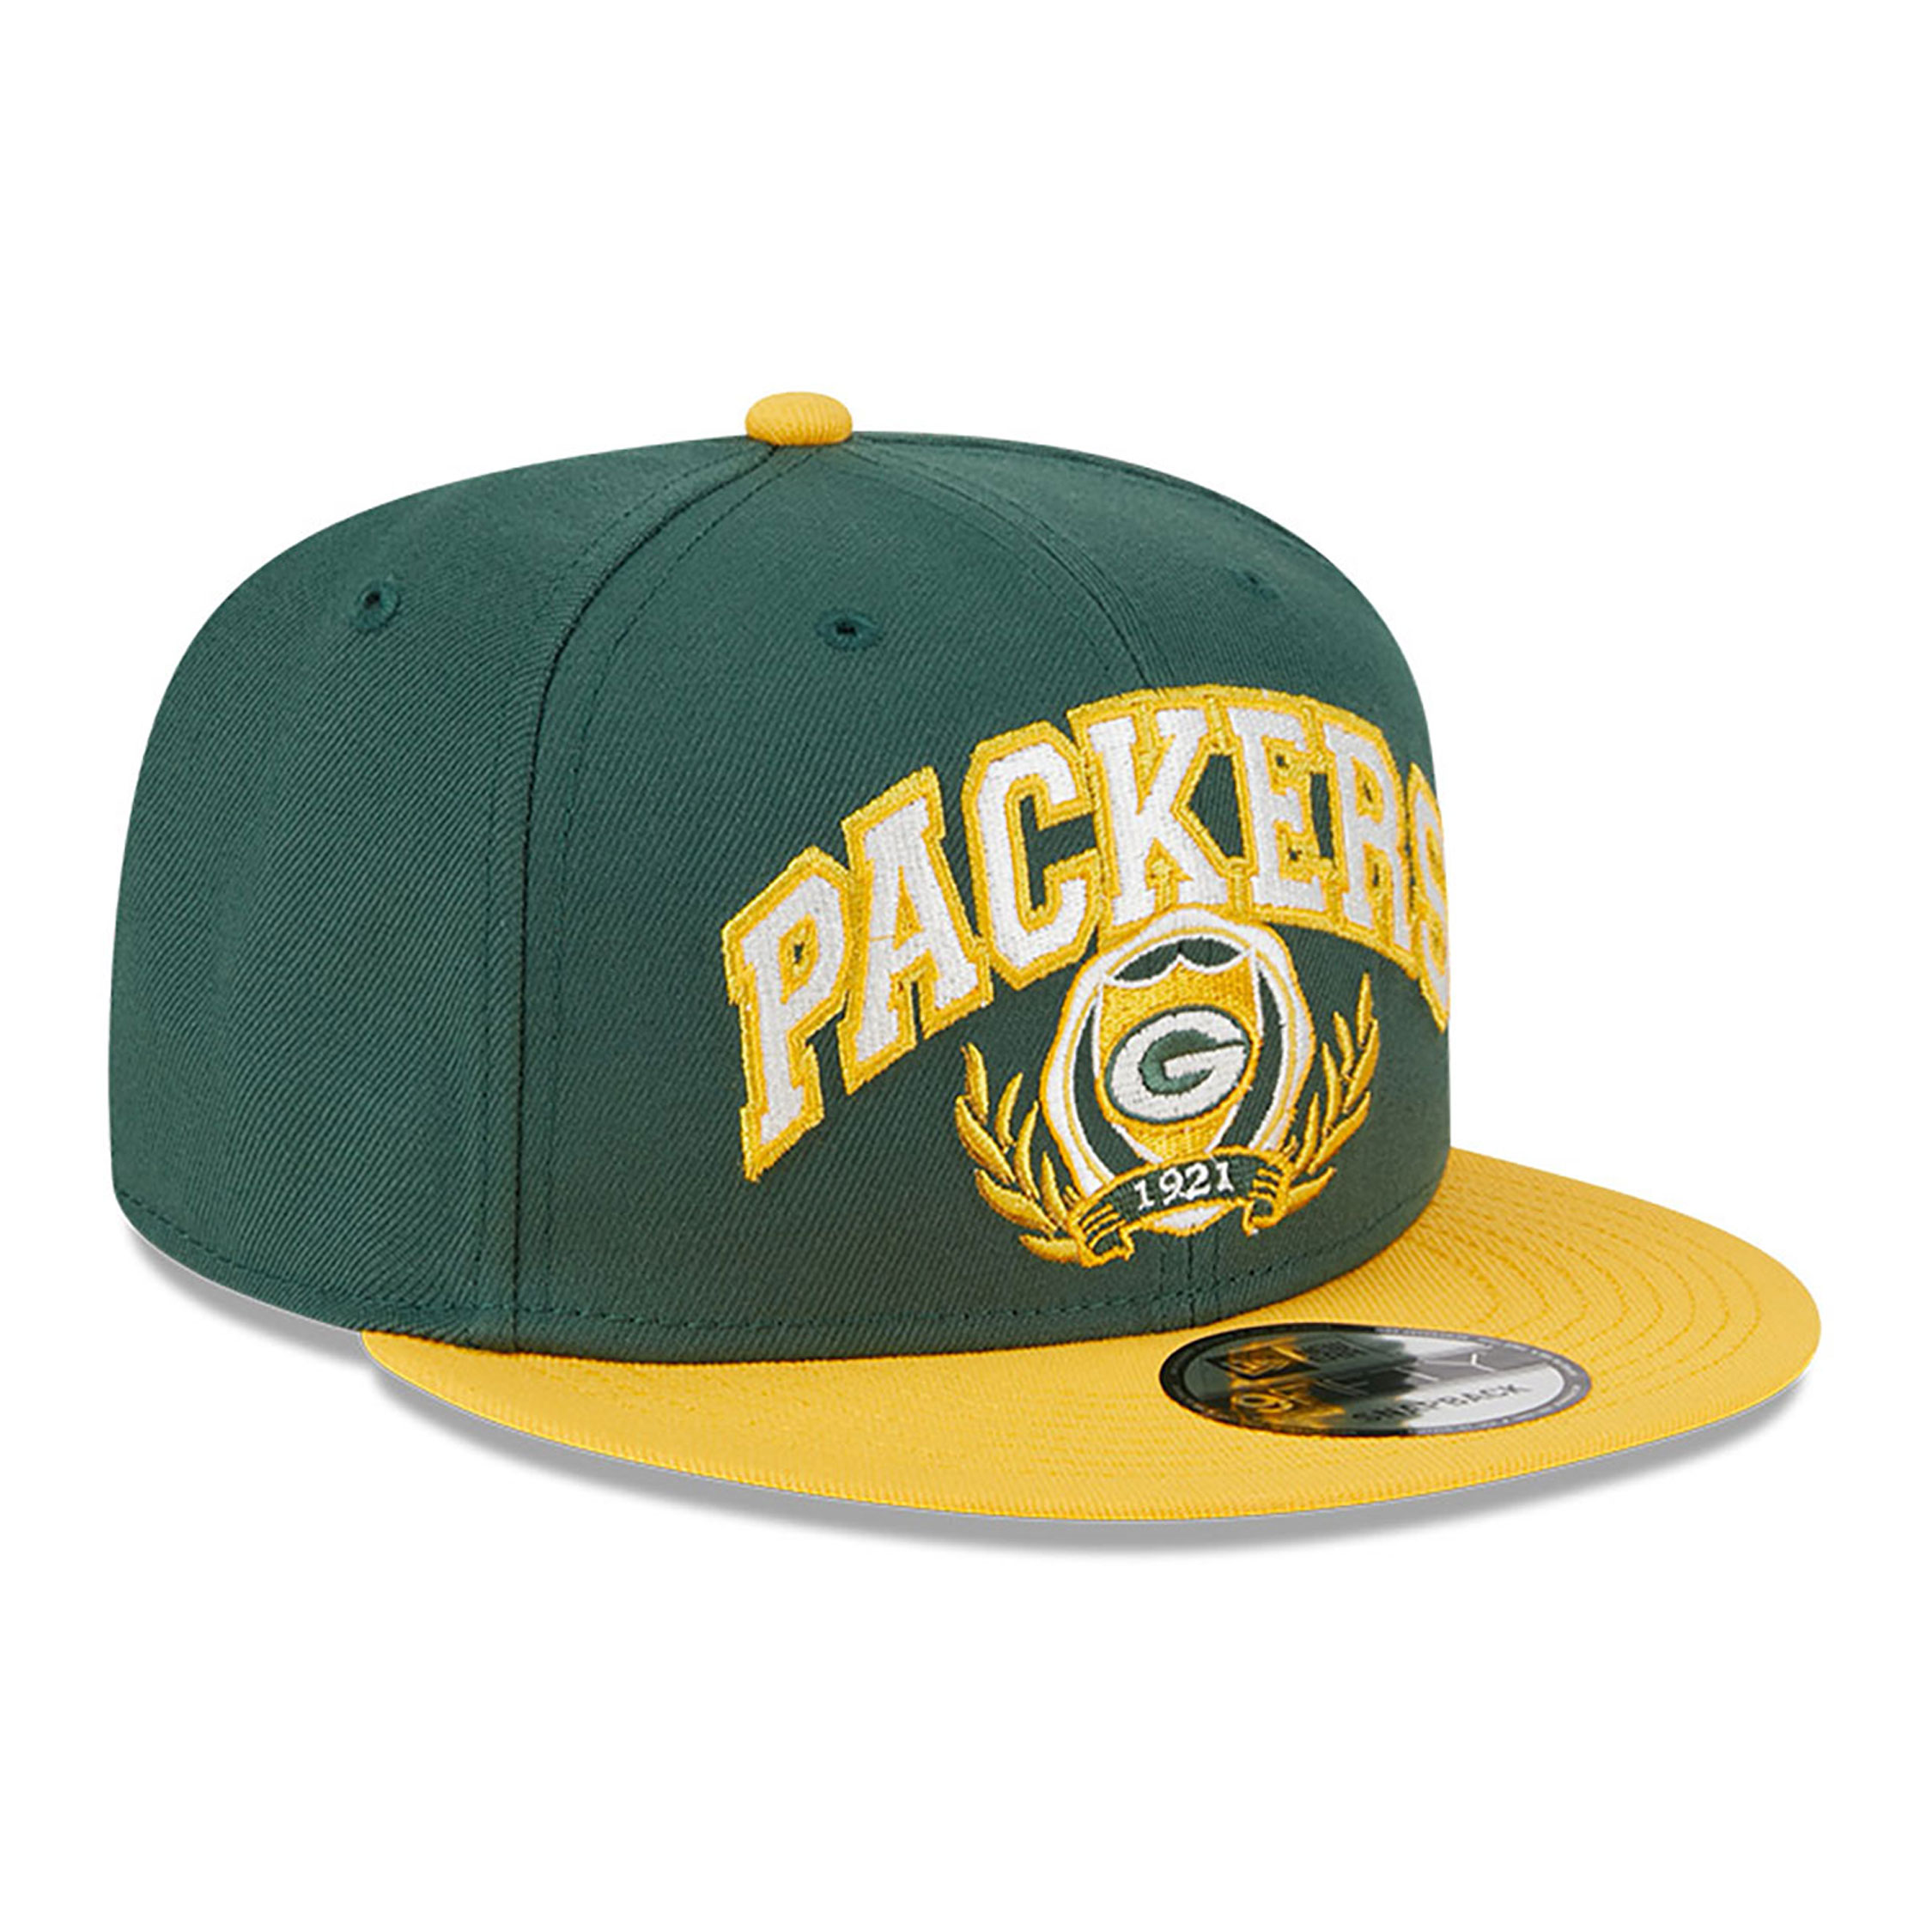 Green Bay Packers NFL Team Dark Green 9FIFTY Snapback Cap